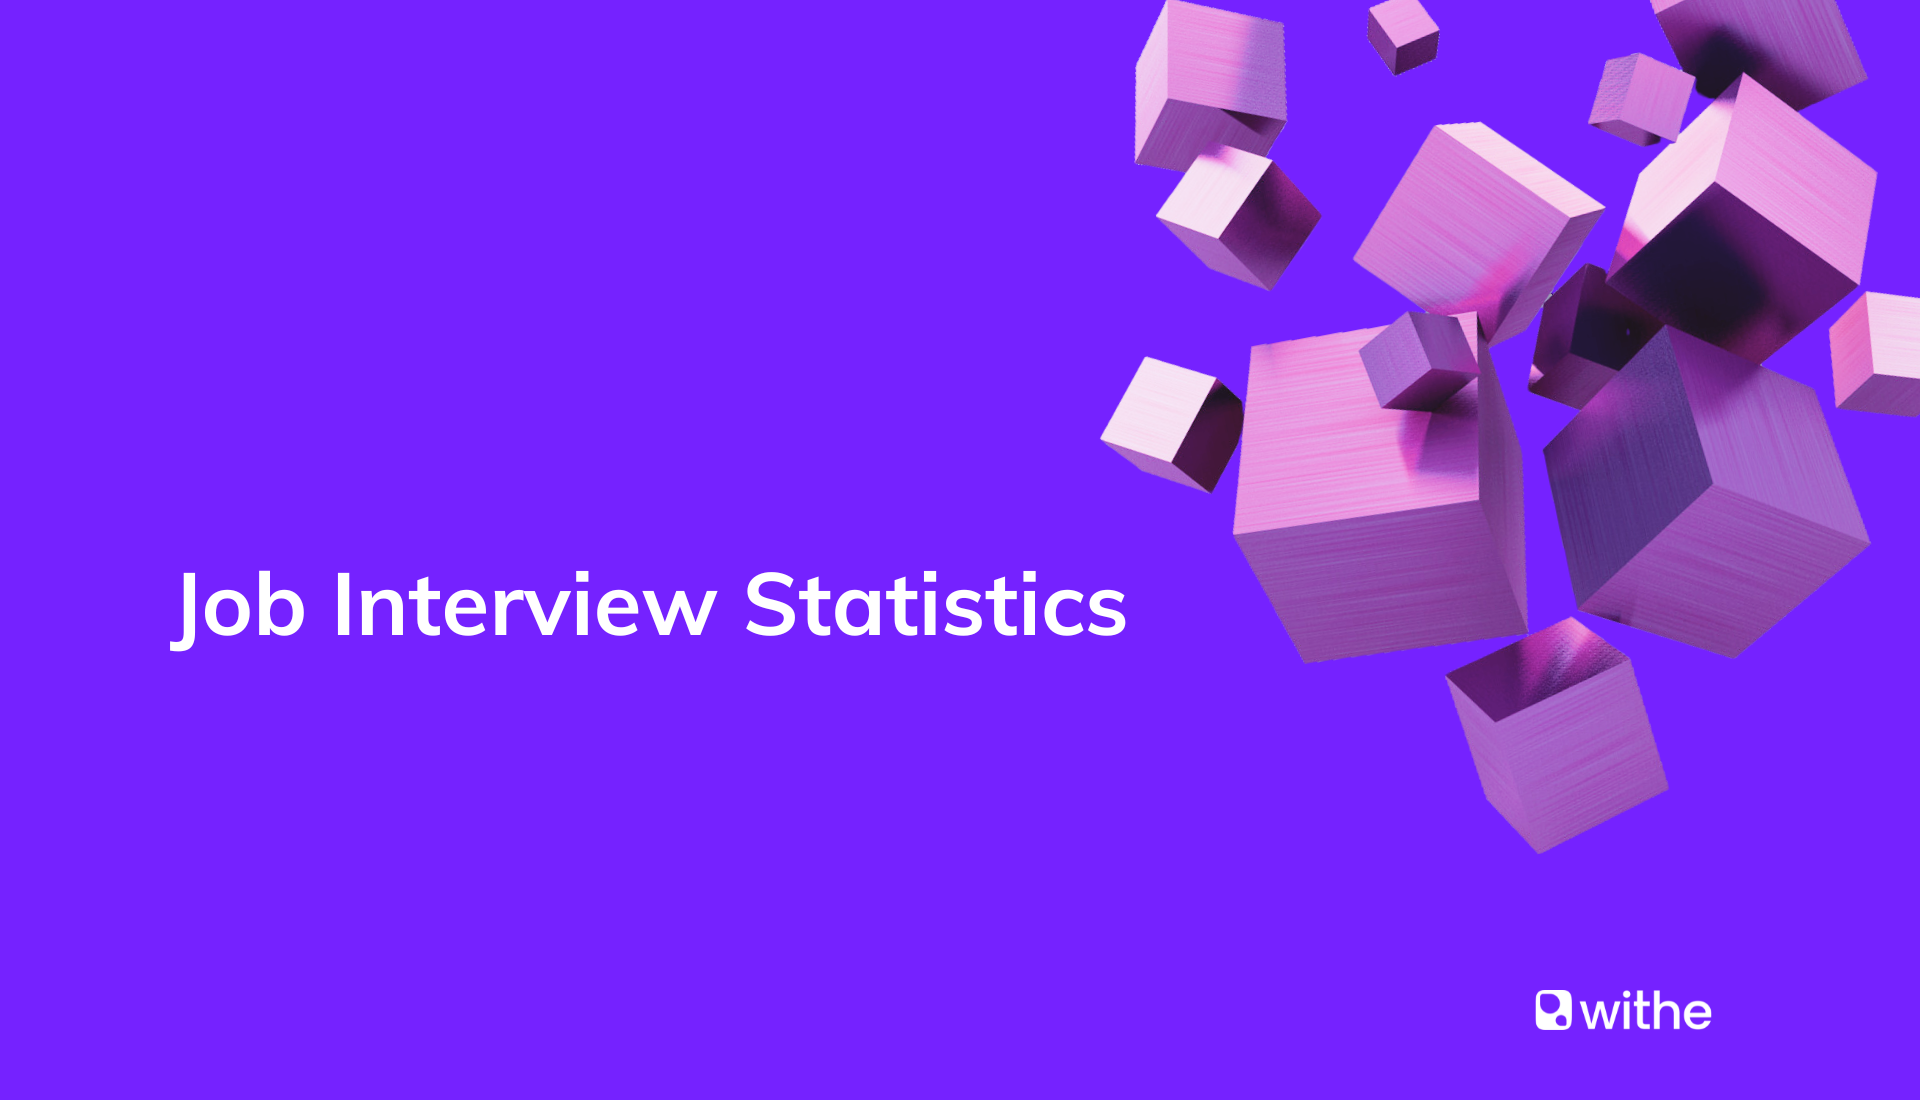 Job interview statistics report